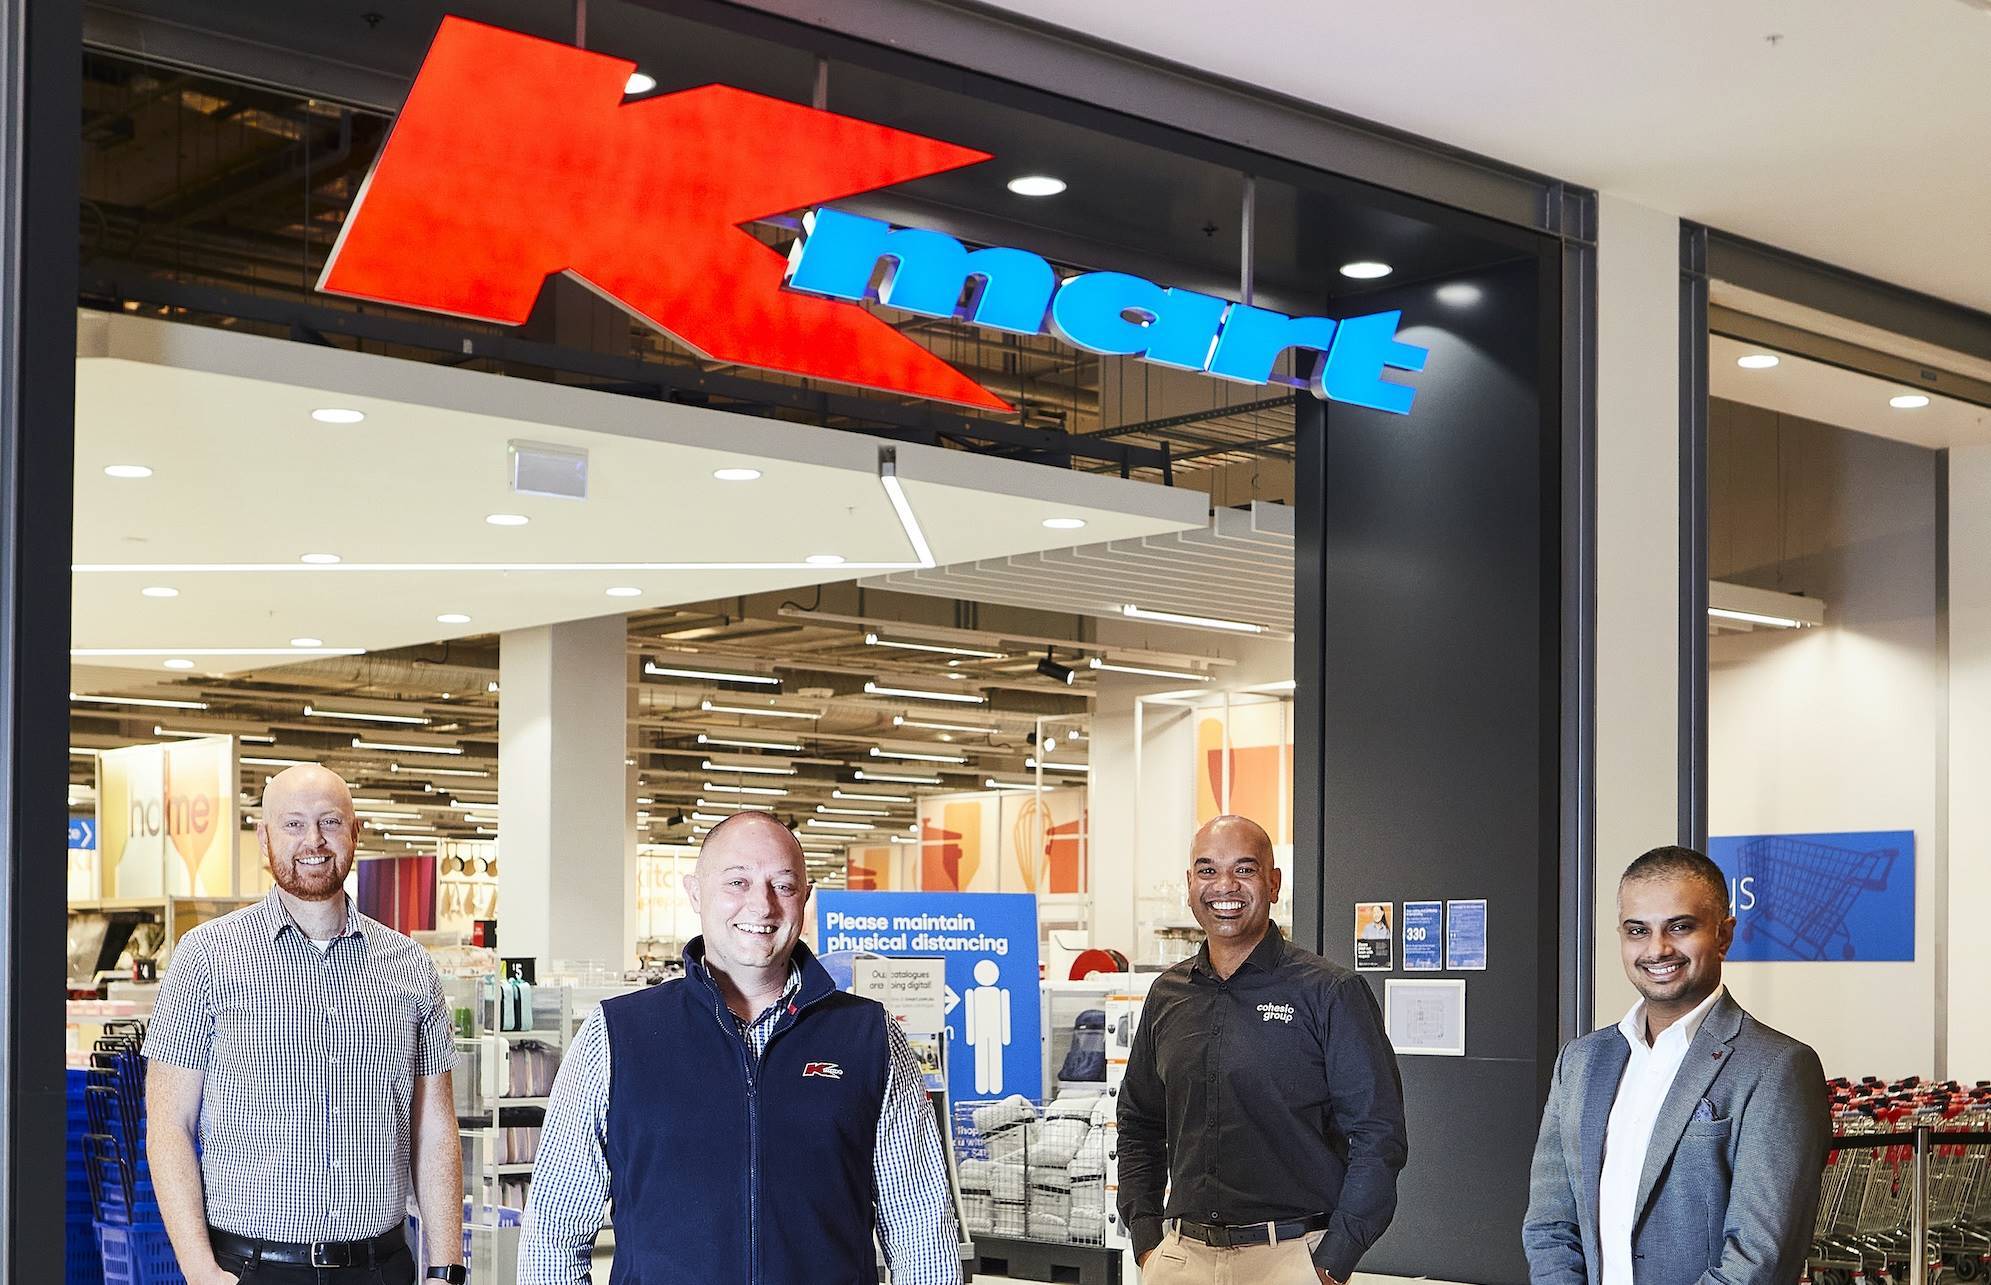 New Kmart Stores Opening in Australia 